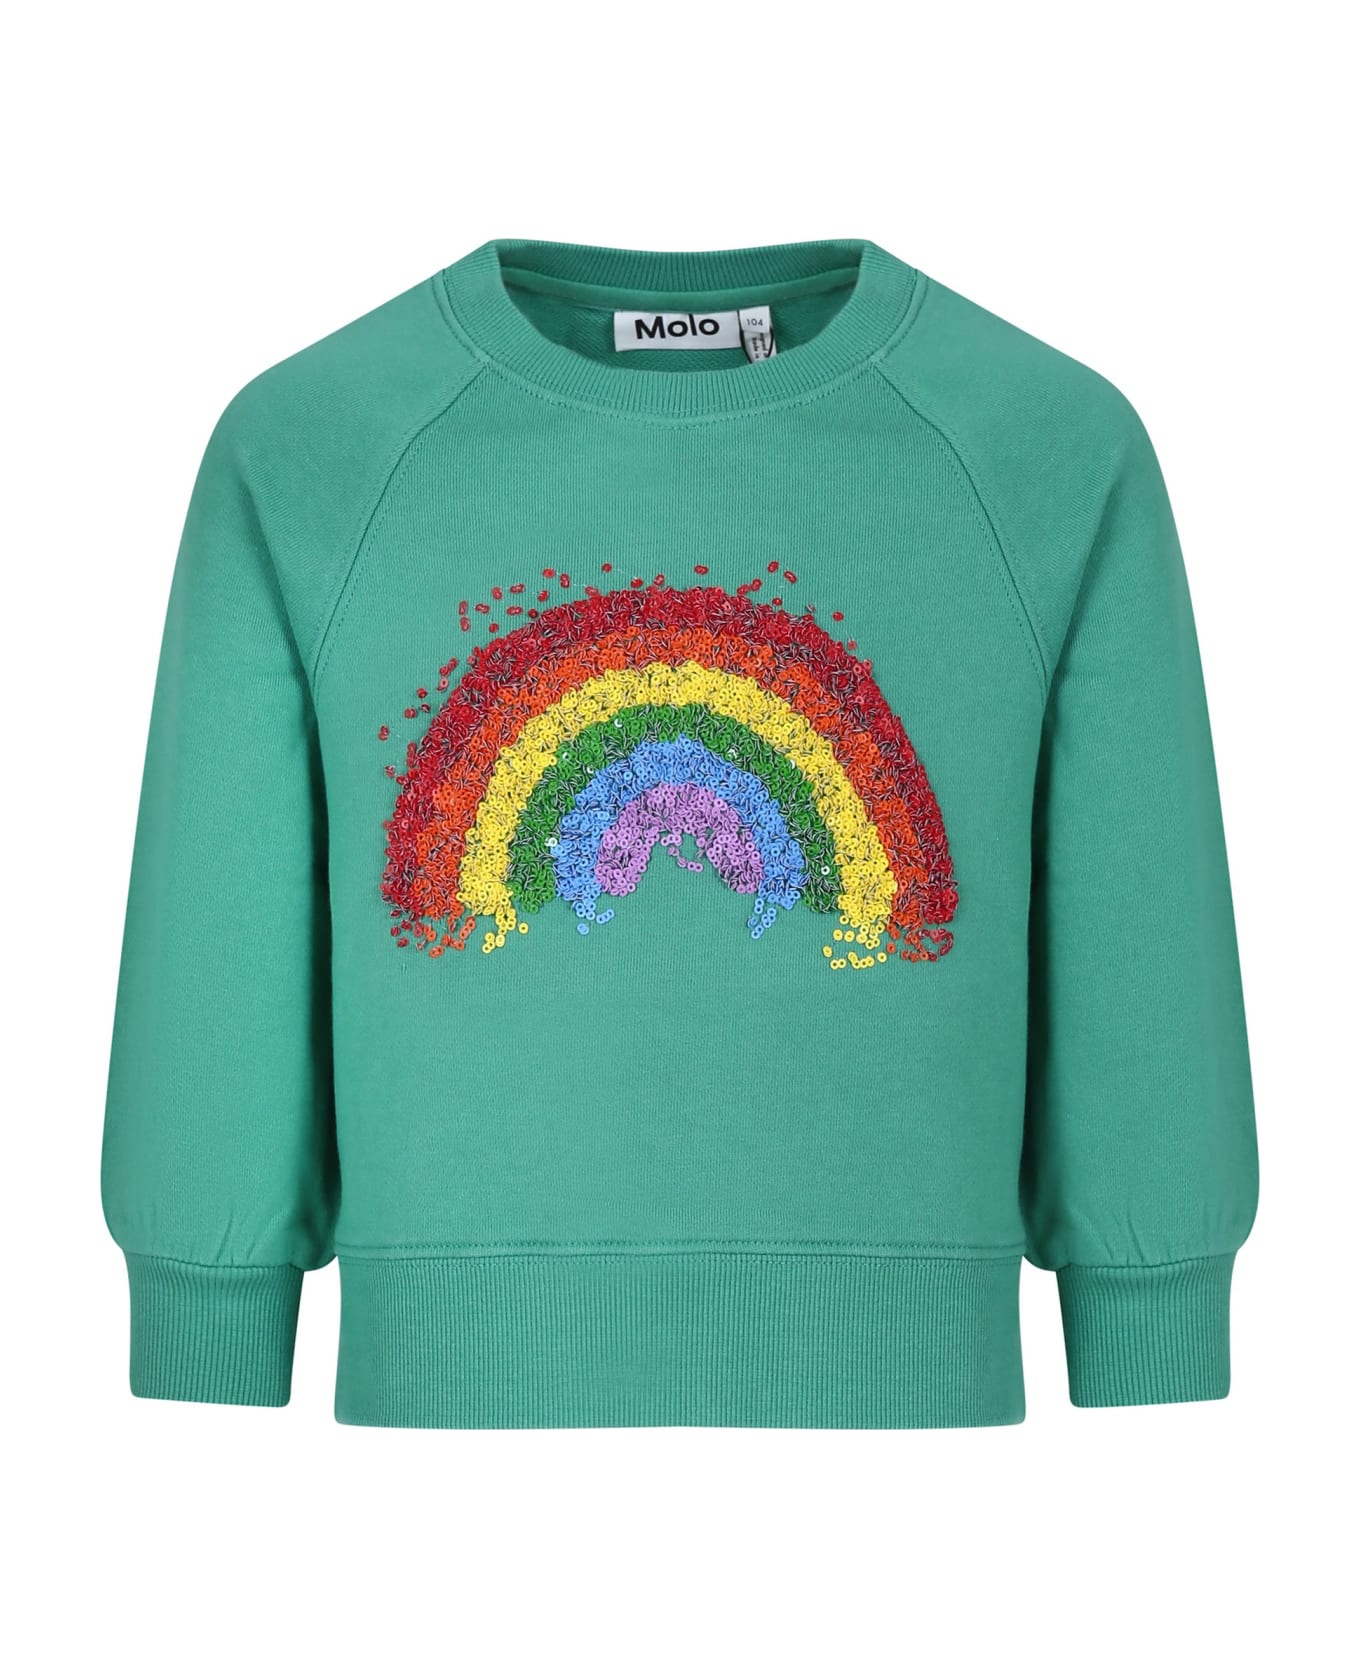 Molo Green Sweatshirt For Girl With Rainbow - Green